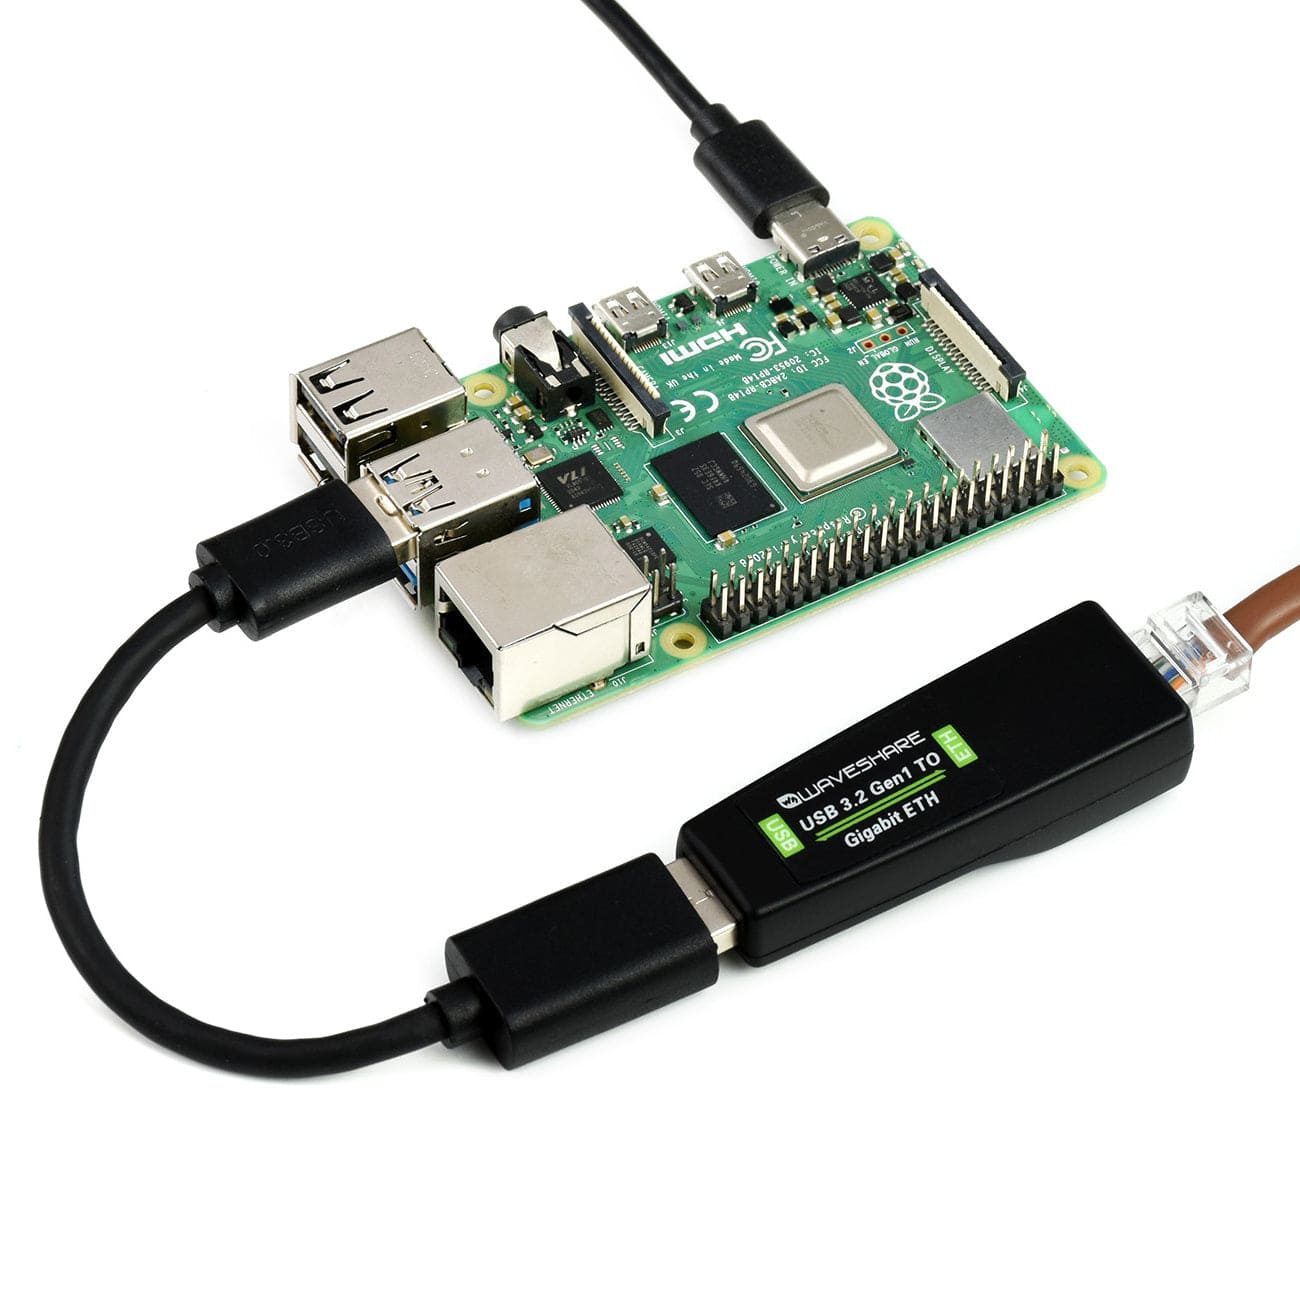 USB 3.2 to Gigabit Ethernet Converter - The Pi Hut